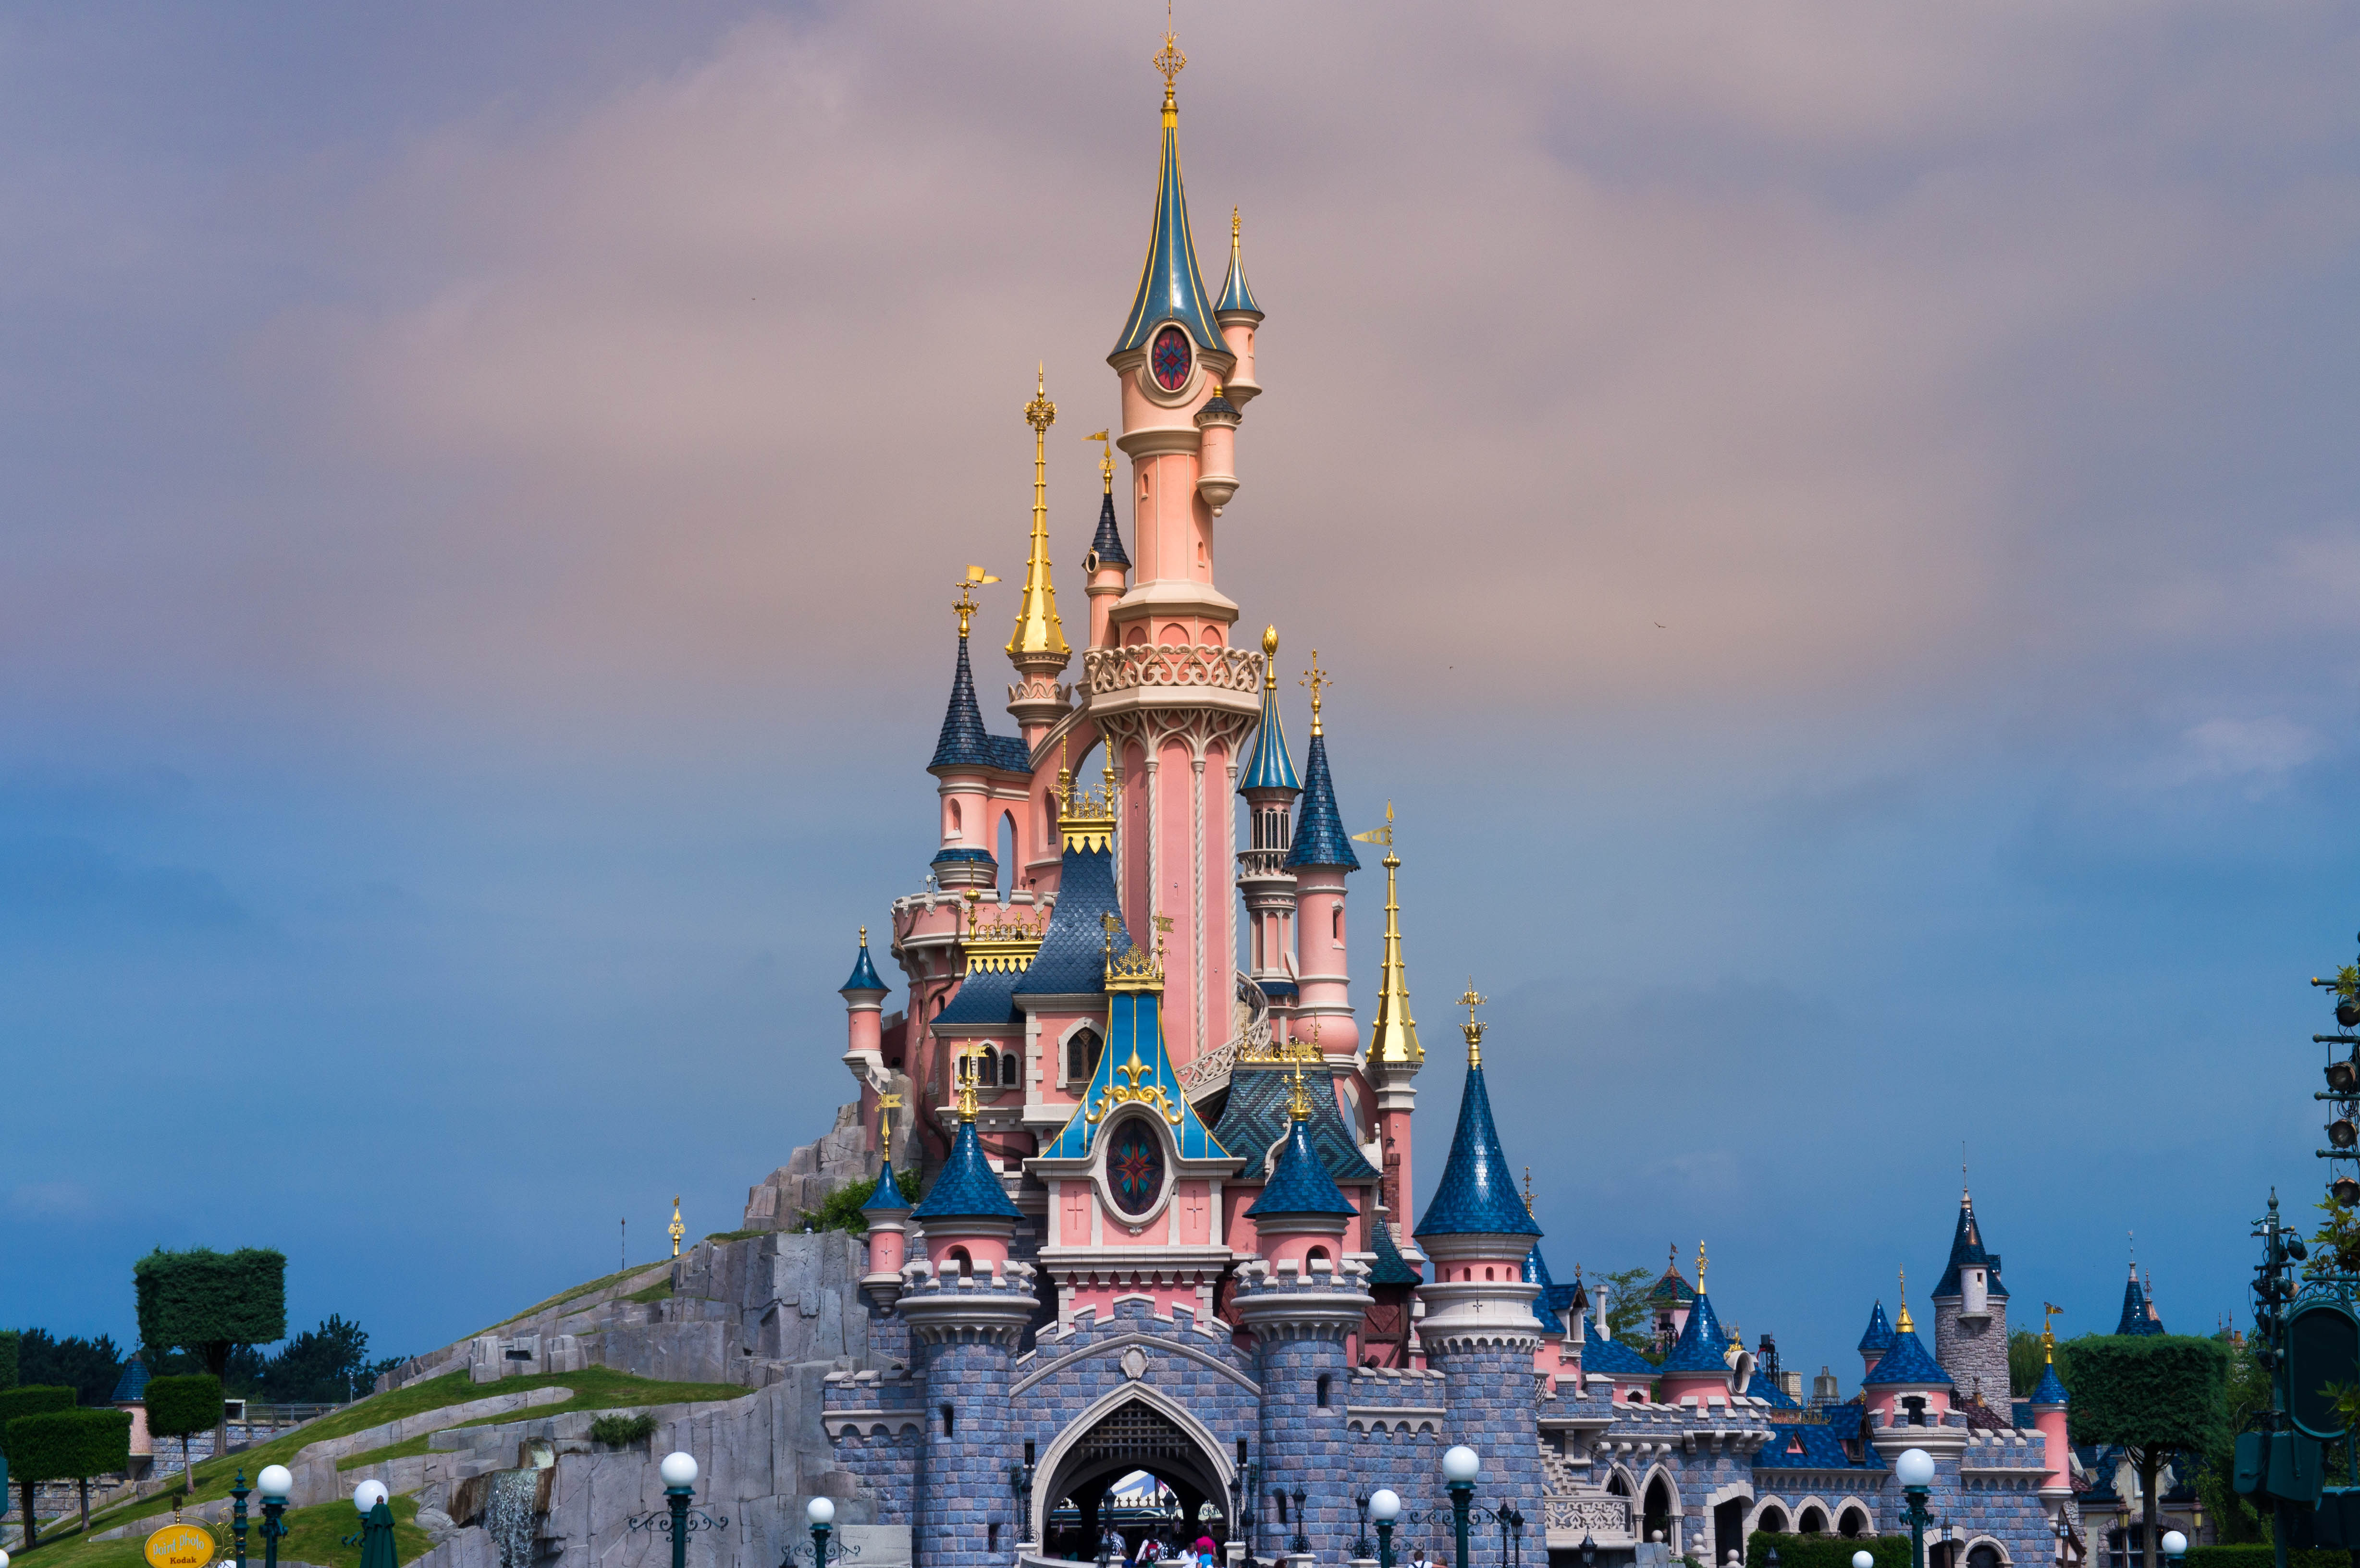 Castle at Disneyland Paris id 149323 BUZZERG